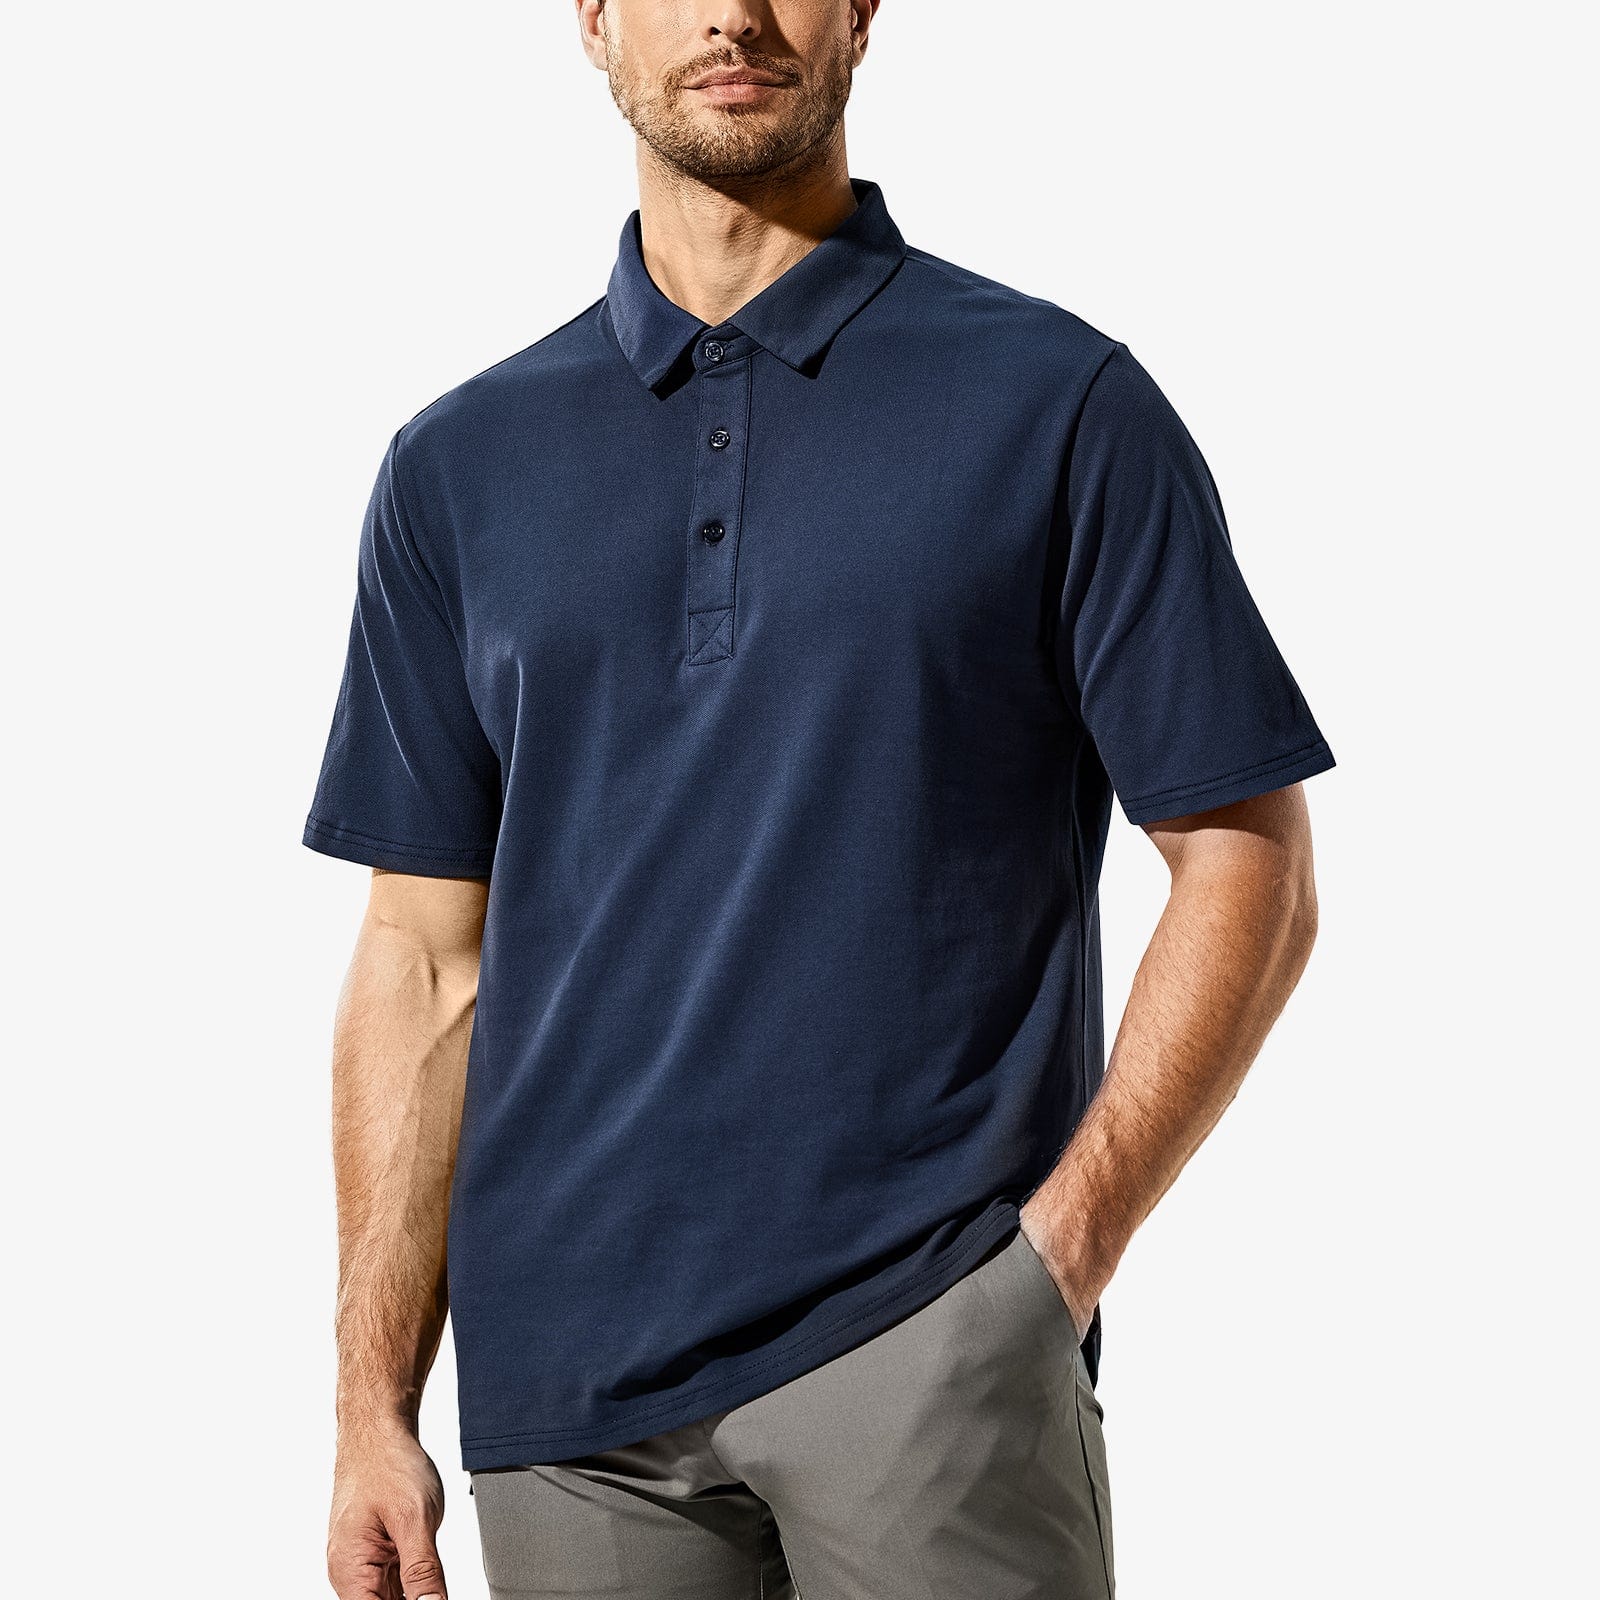 Men Shirts Cotton Golf Collared Shirts